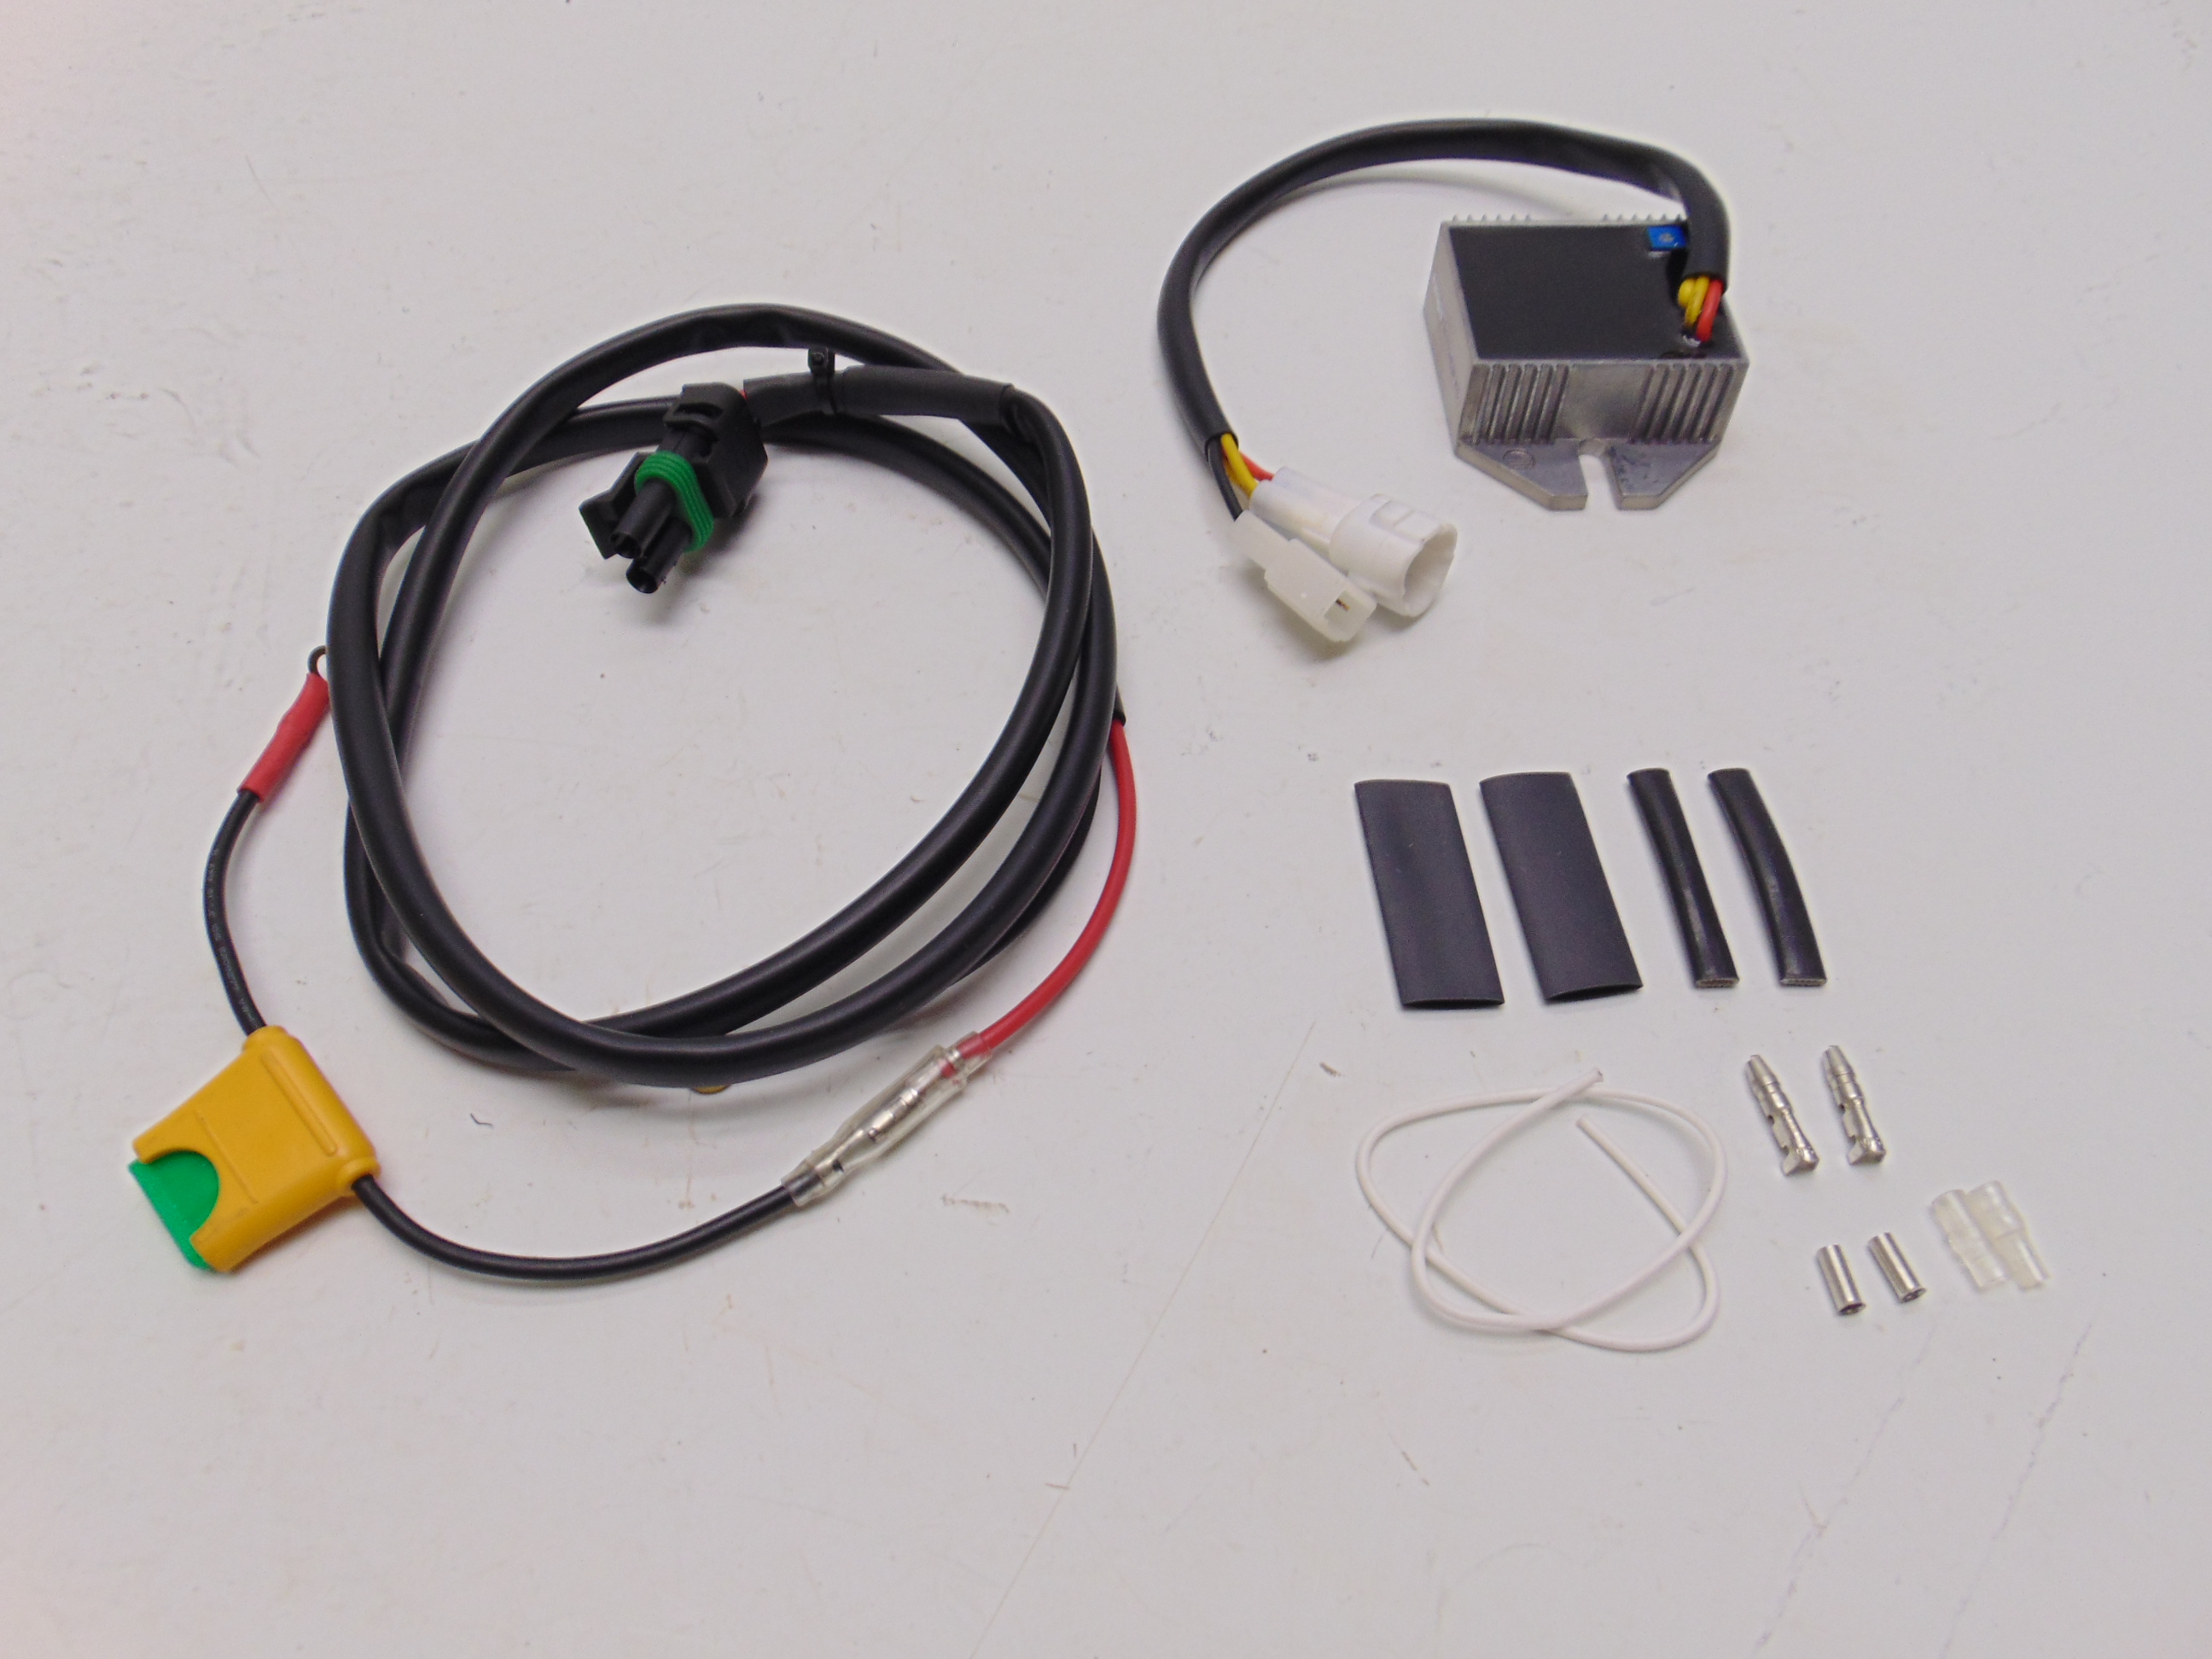 Baja Designs Wiring Harness Kit for Squadron LED Race Light | eBay